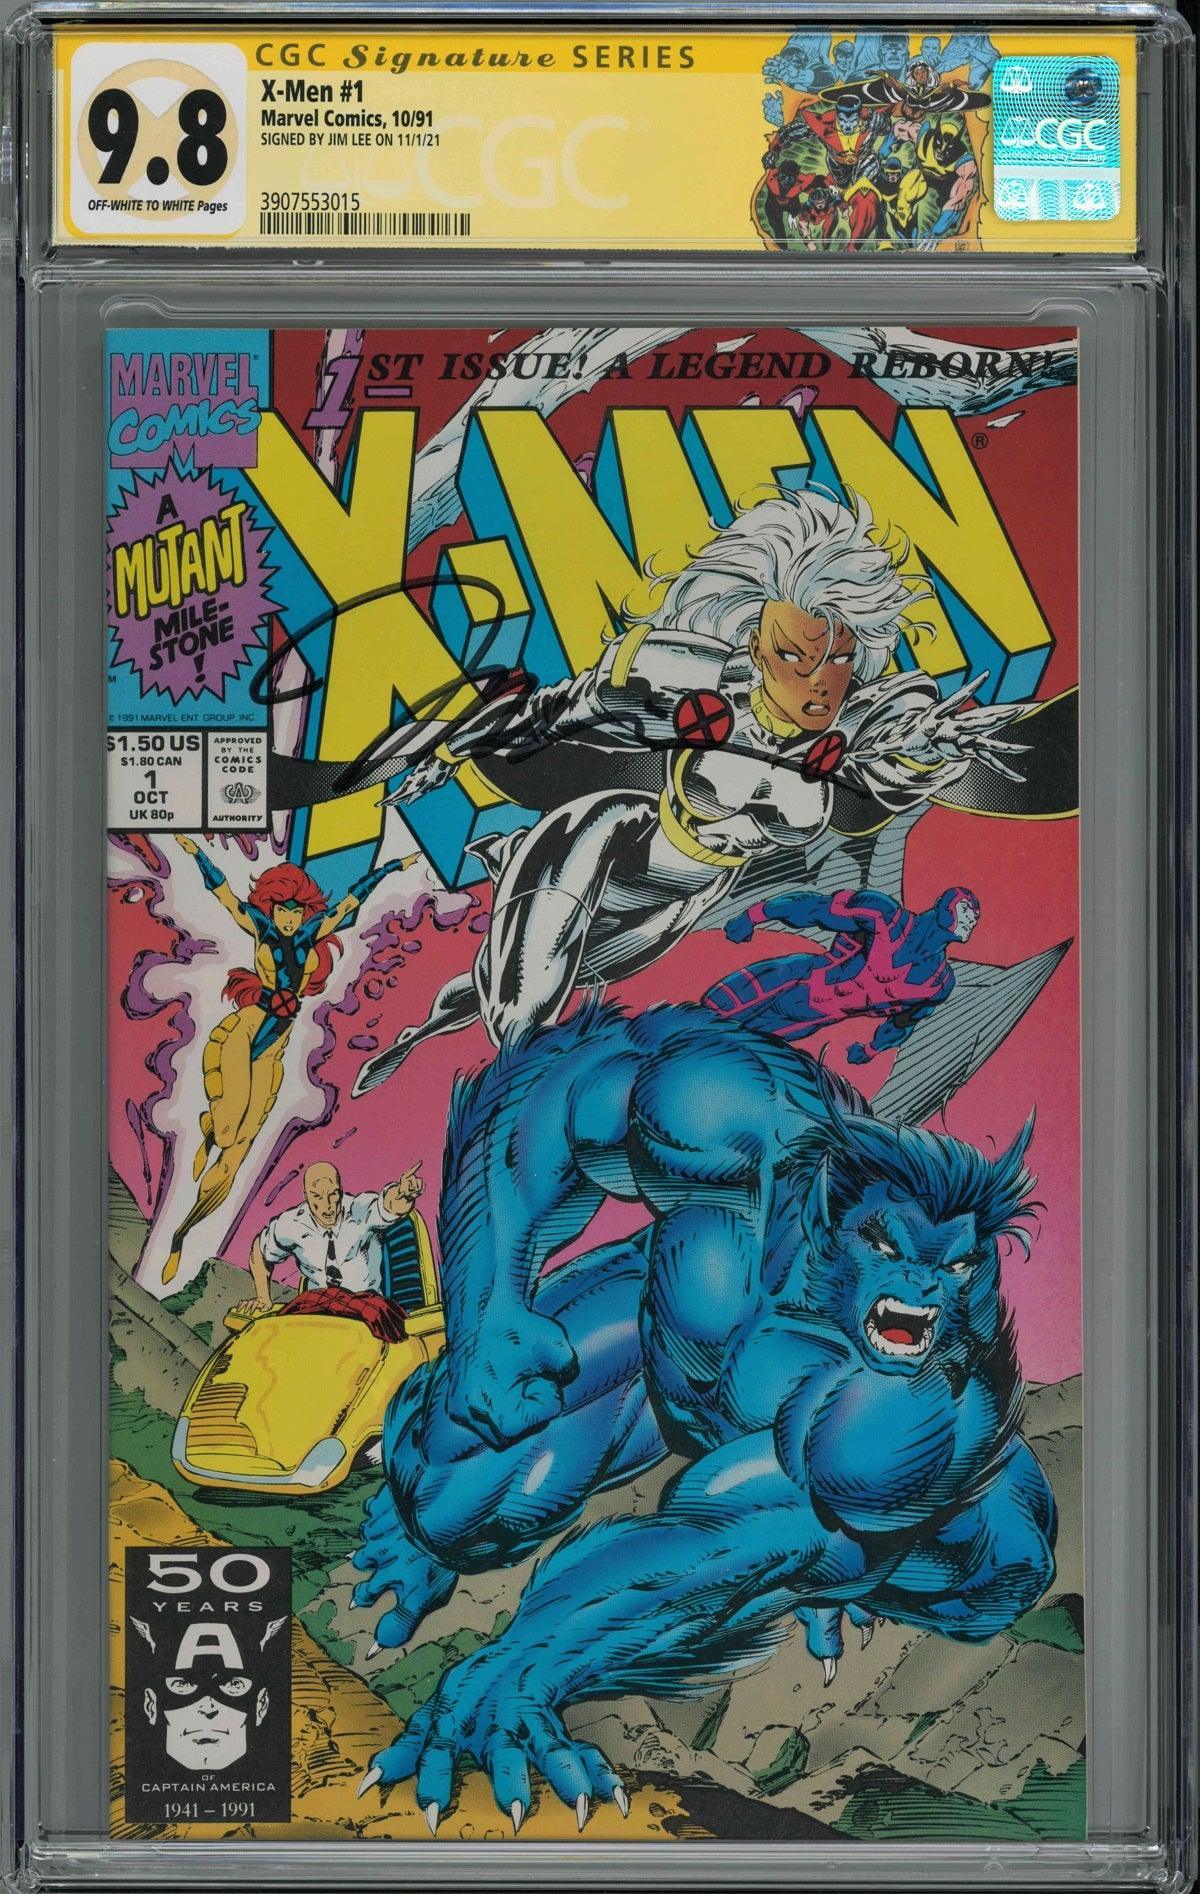 CGC X-MEN VOL 2 #1 BEAST & STORM COVER (9.8) SIGNATURE SERIES - SIGNED BY JIM LEE - Kings Comics